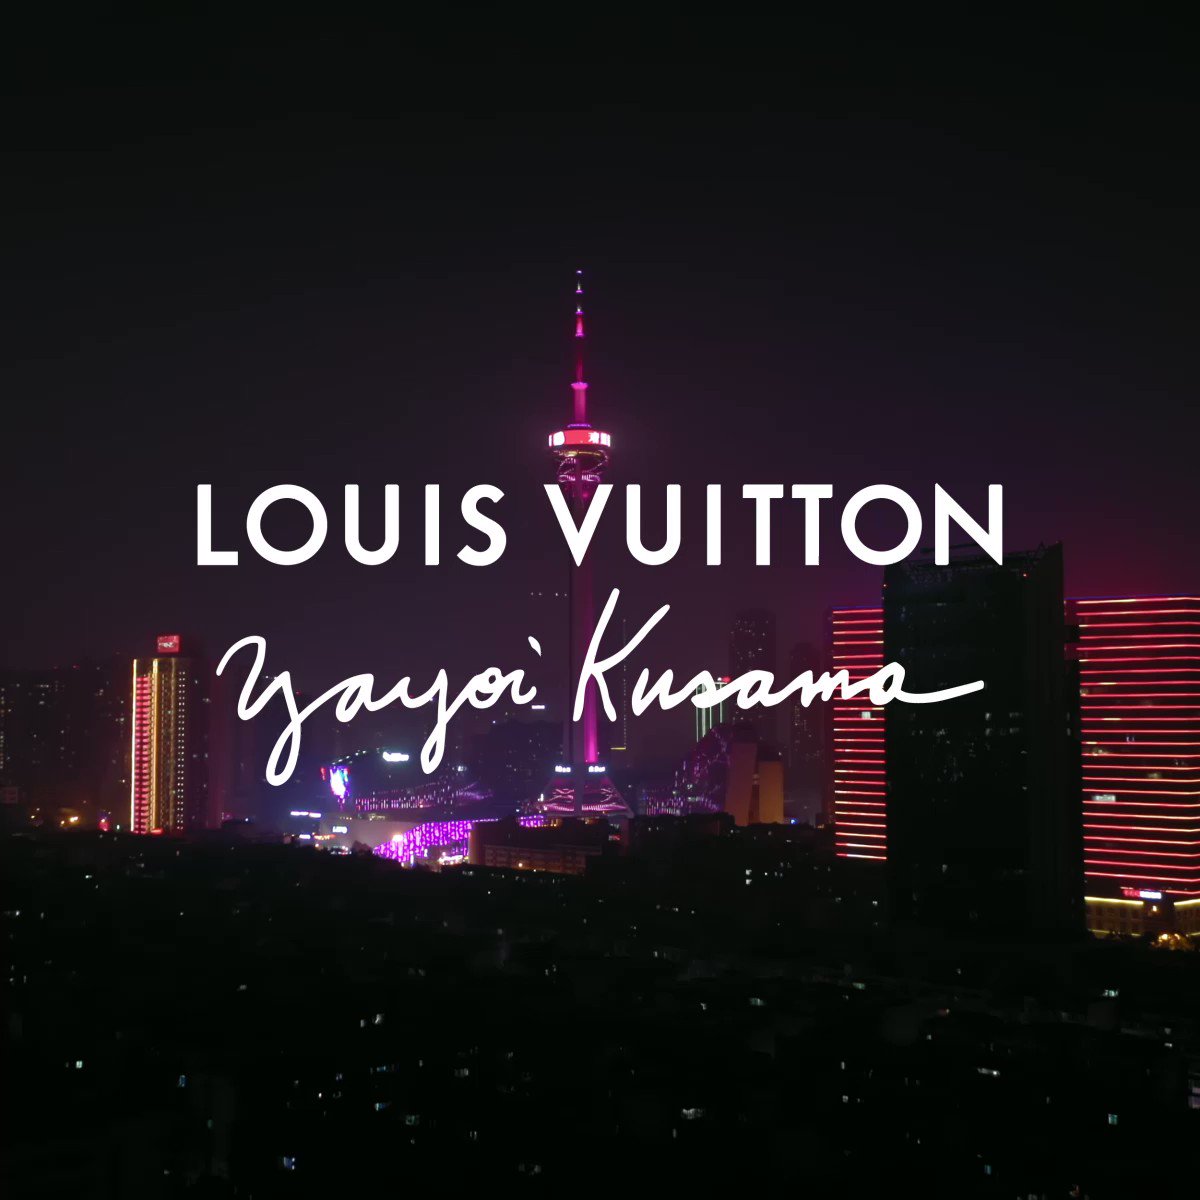 Louis Vuitton on X: #LVxYayoiKusama around the globe. Iconic